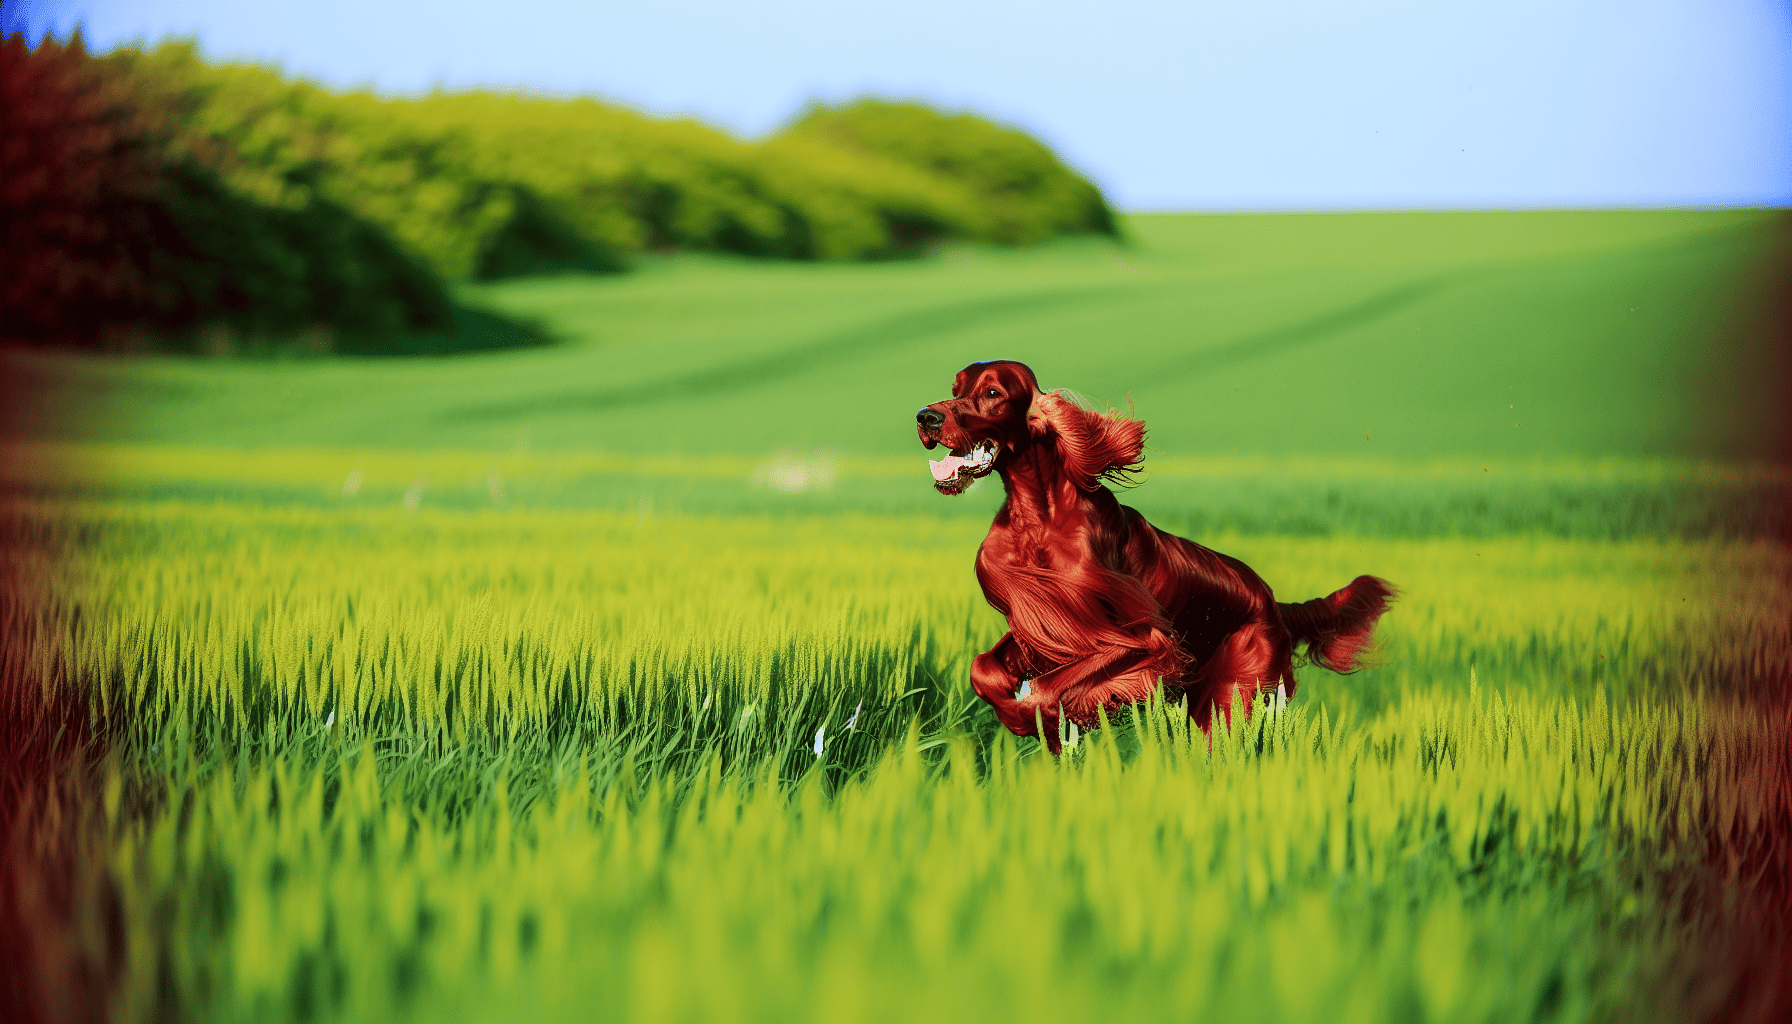 Irish Setter with a stunning red coat running through a field